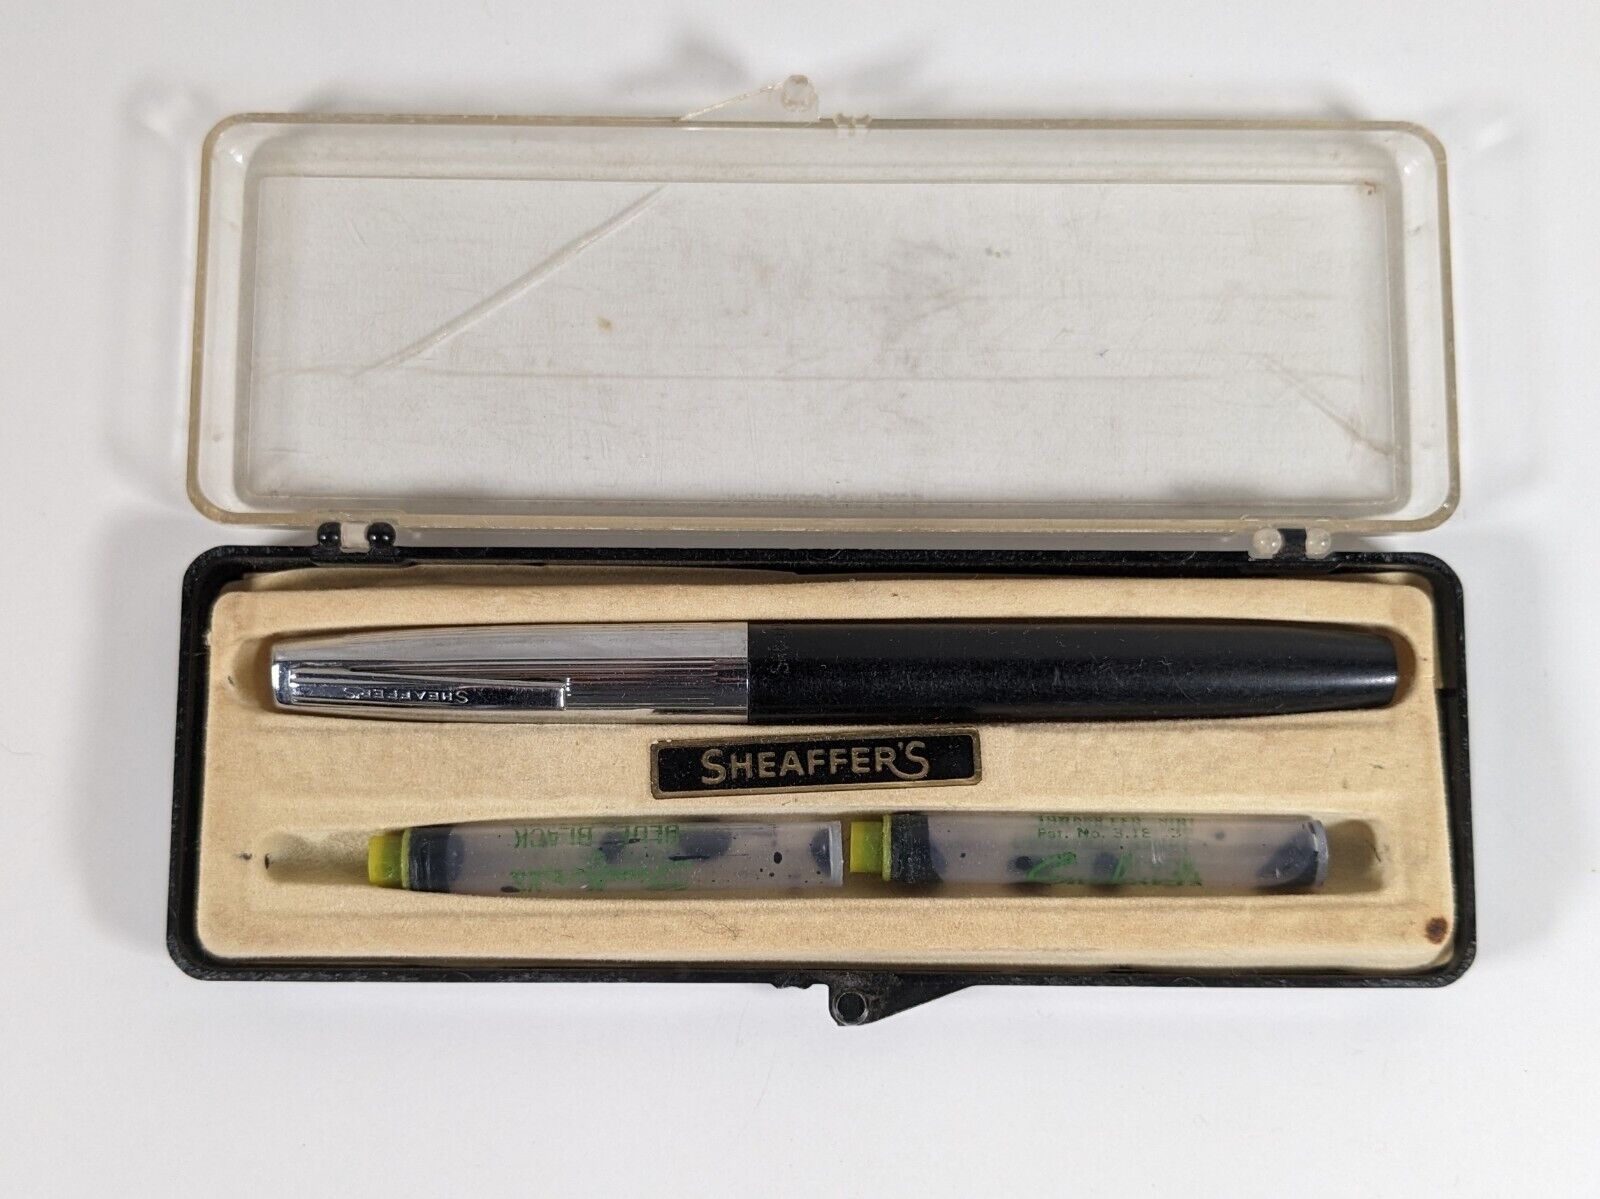 AS IS Vintage Shaeffer 's Black Plastic W/Chrome Cartridge Pen With Form P-75